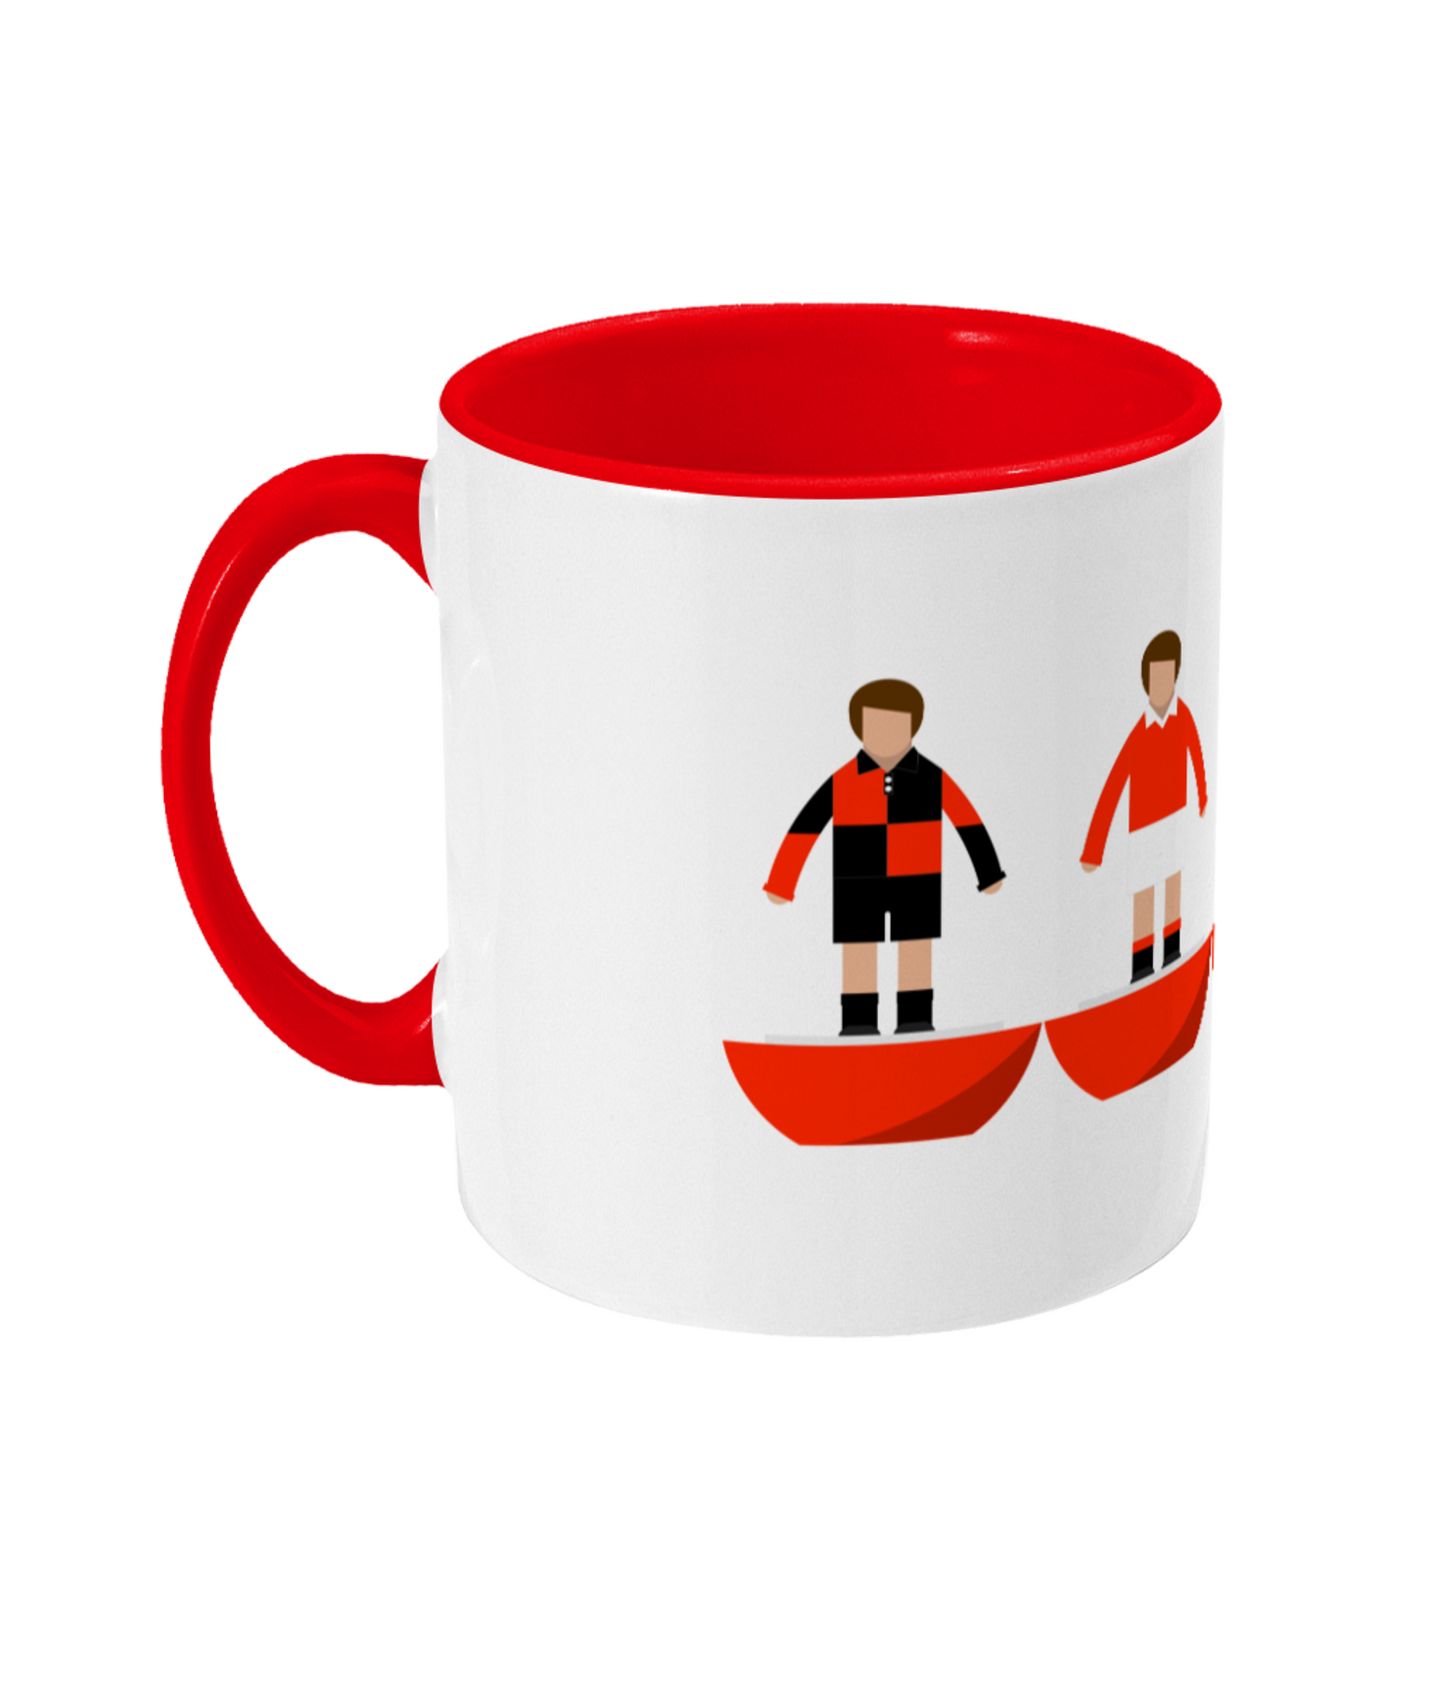 Football Kits 'Swindon Town combined' Mug